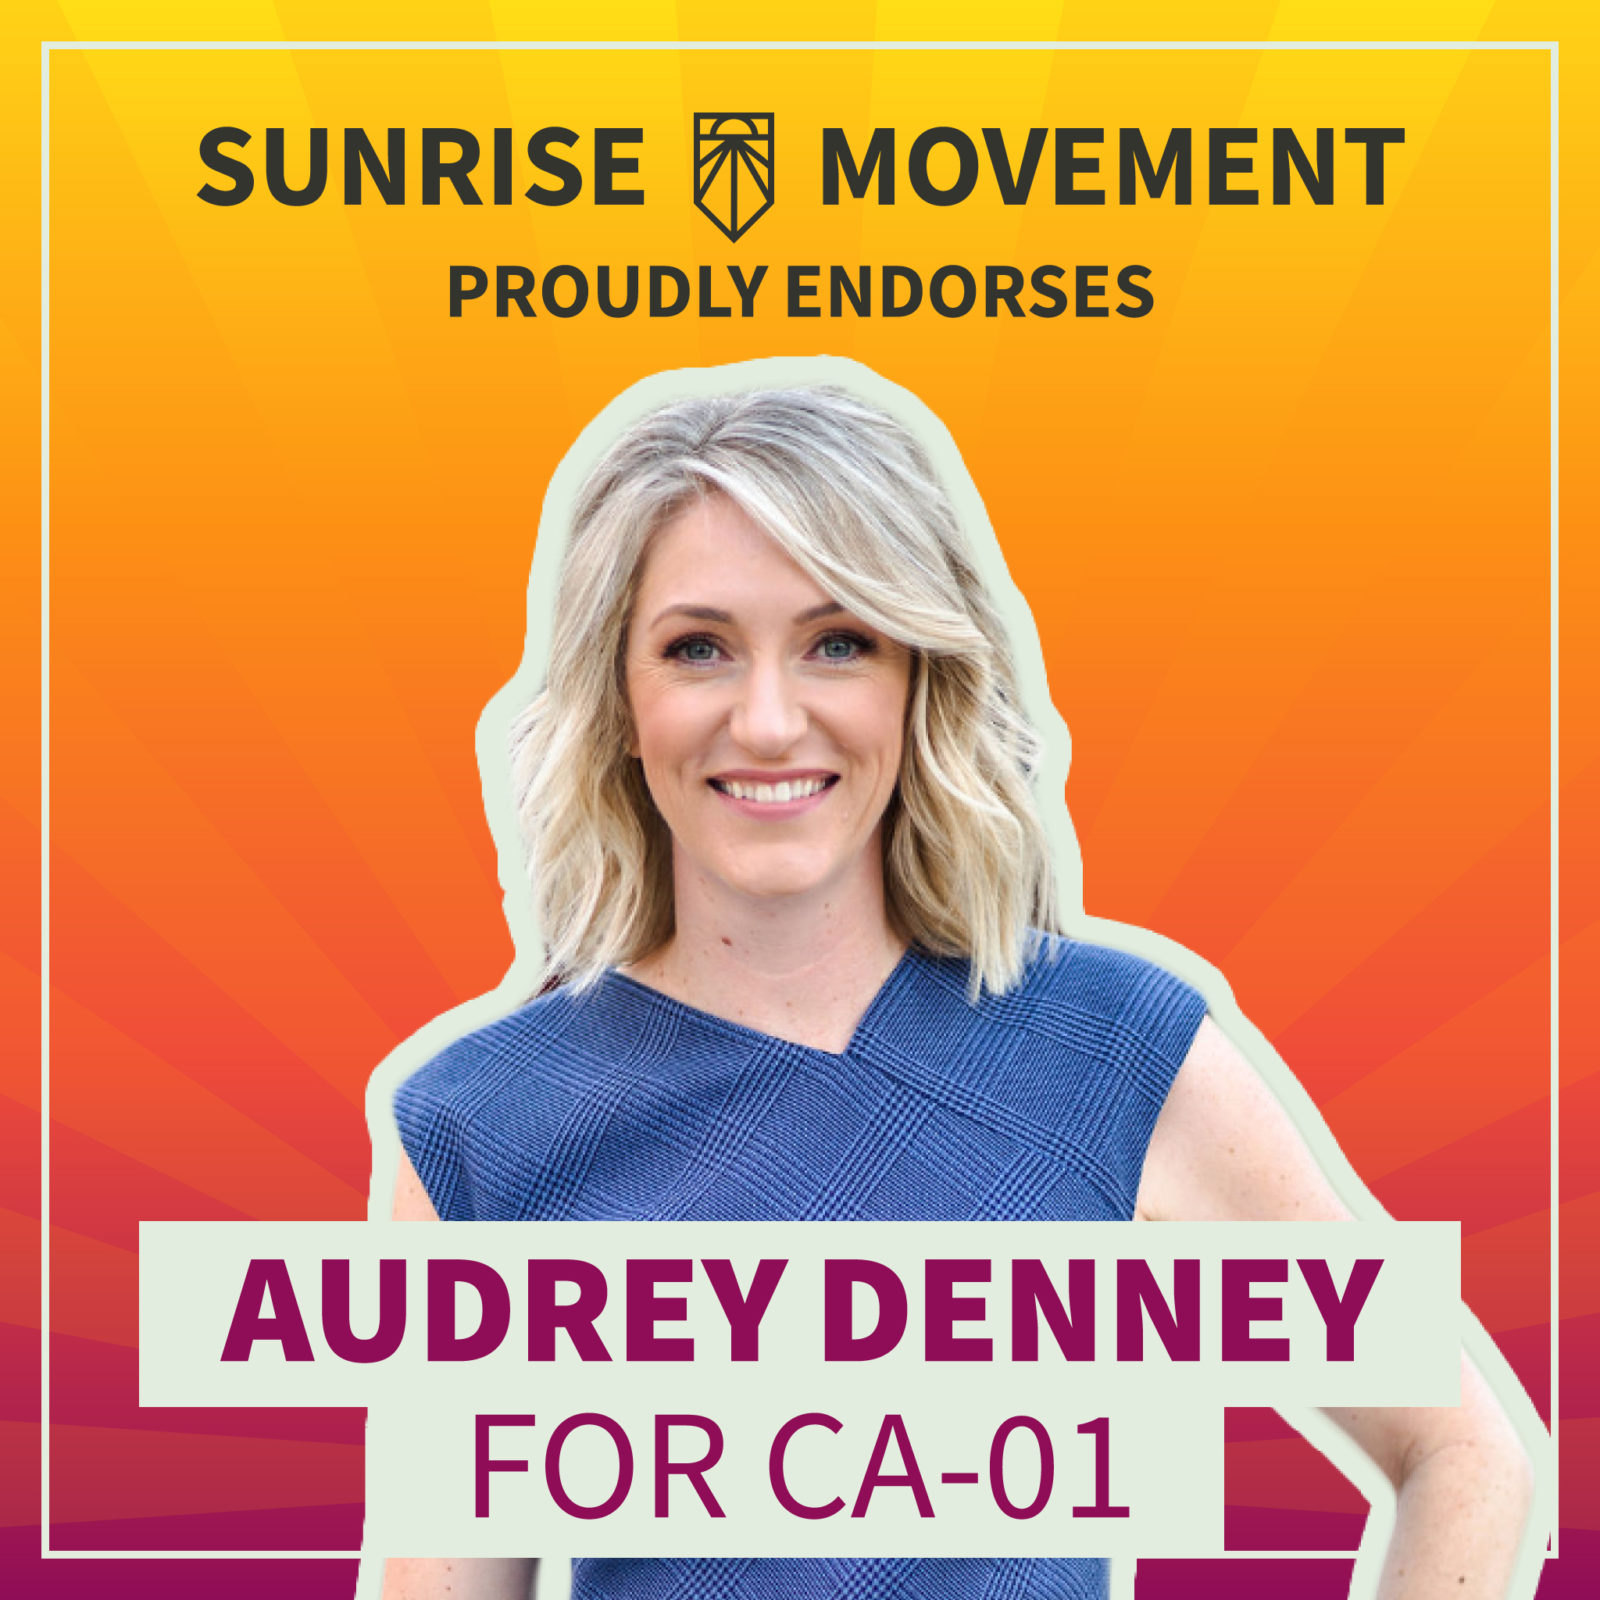 Una foto de Audrey Denney con texto: Sunrise Movement respalda con orgullo a Audrey Denney para CA-01